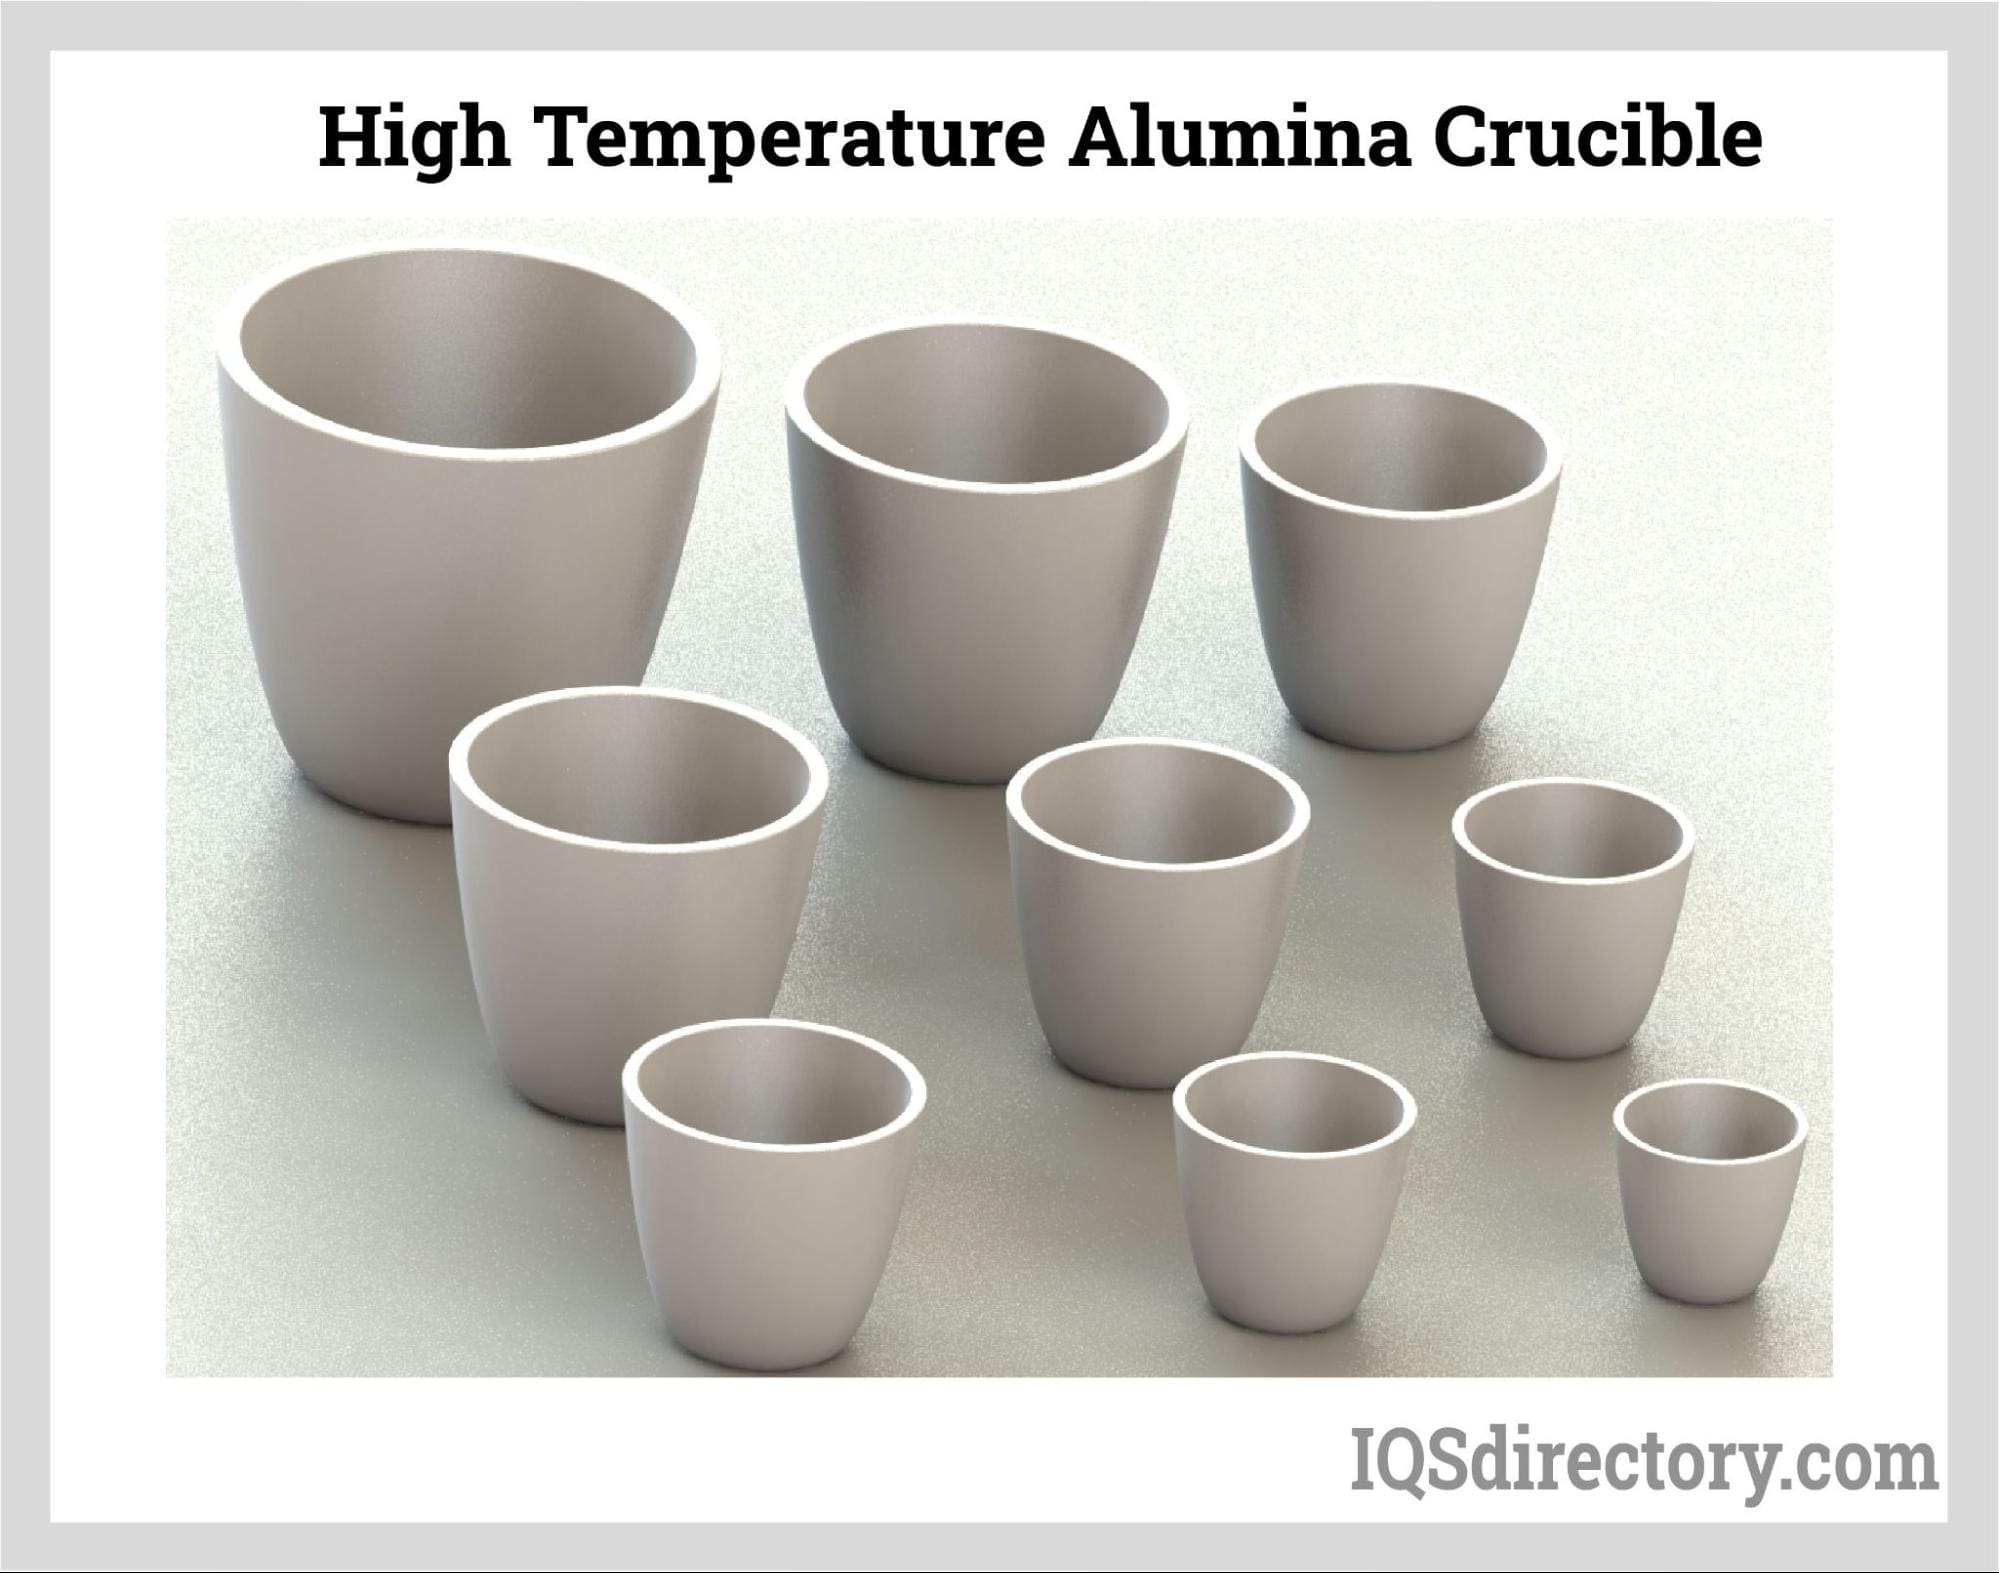 Leading Supplier of Alumina Crucibles